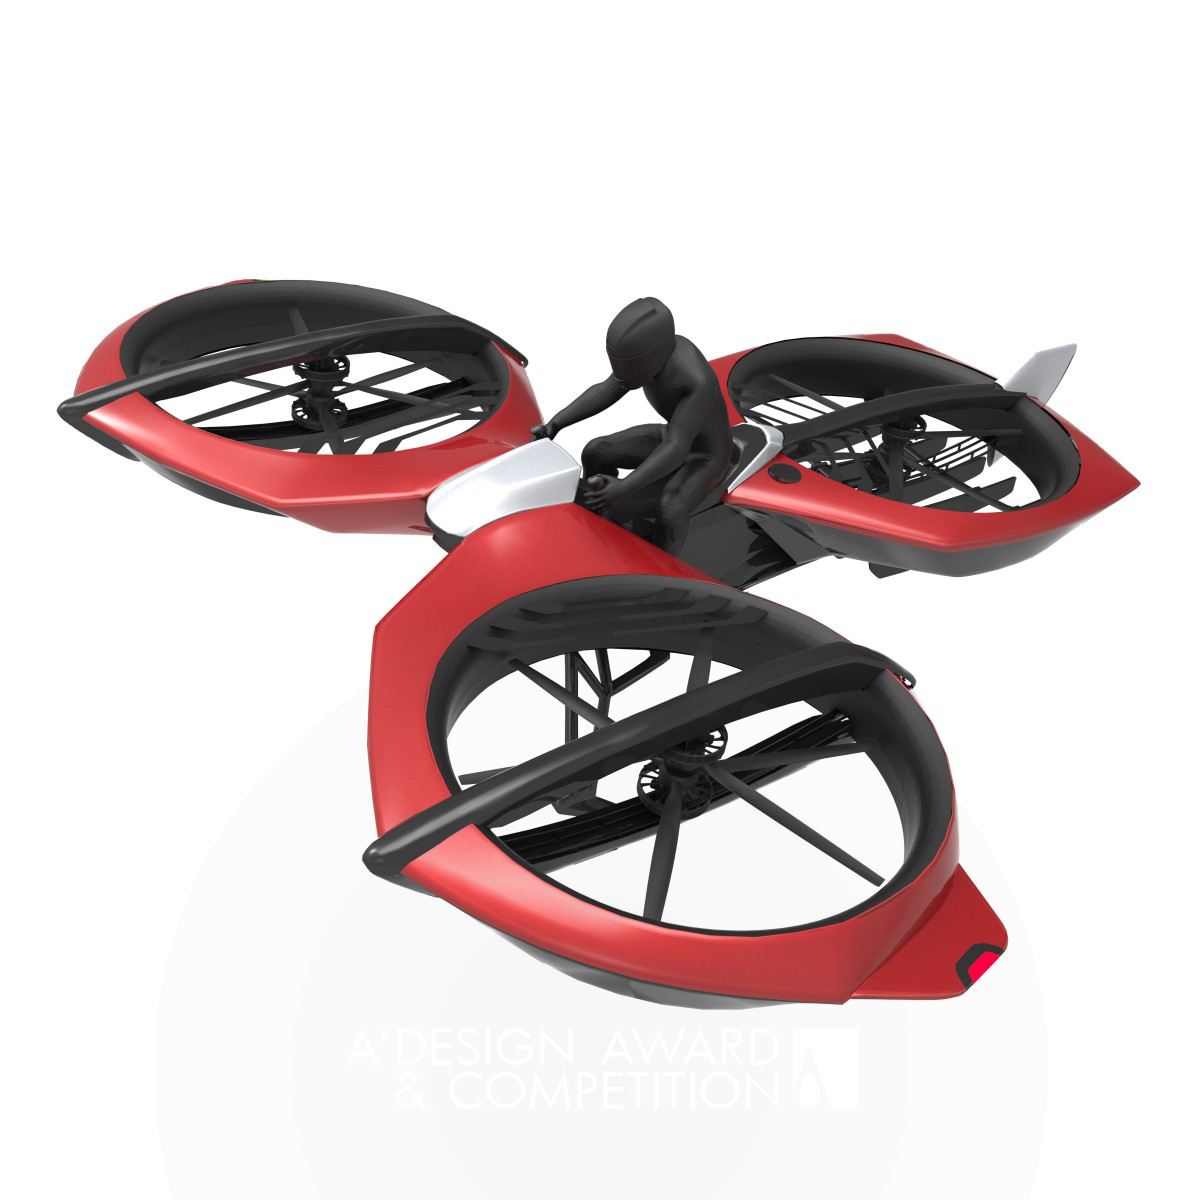 Flike Passenger Drone  Passenger drone by Maform Design Studio Bronze Futuristic Design Award Winner 2017 